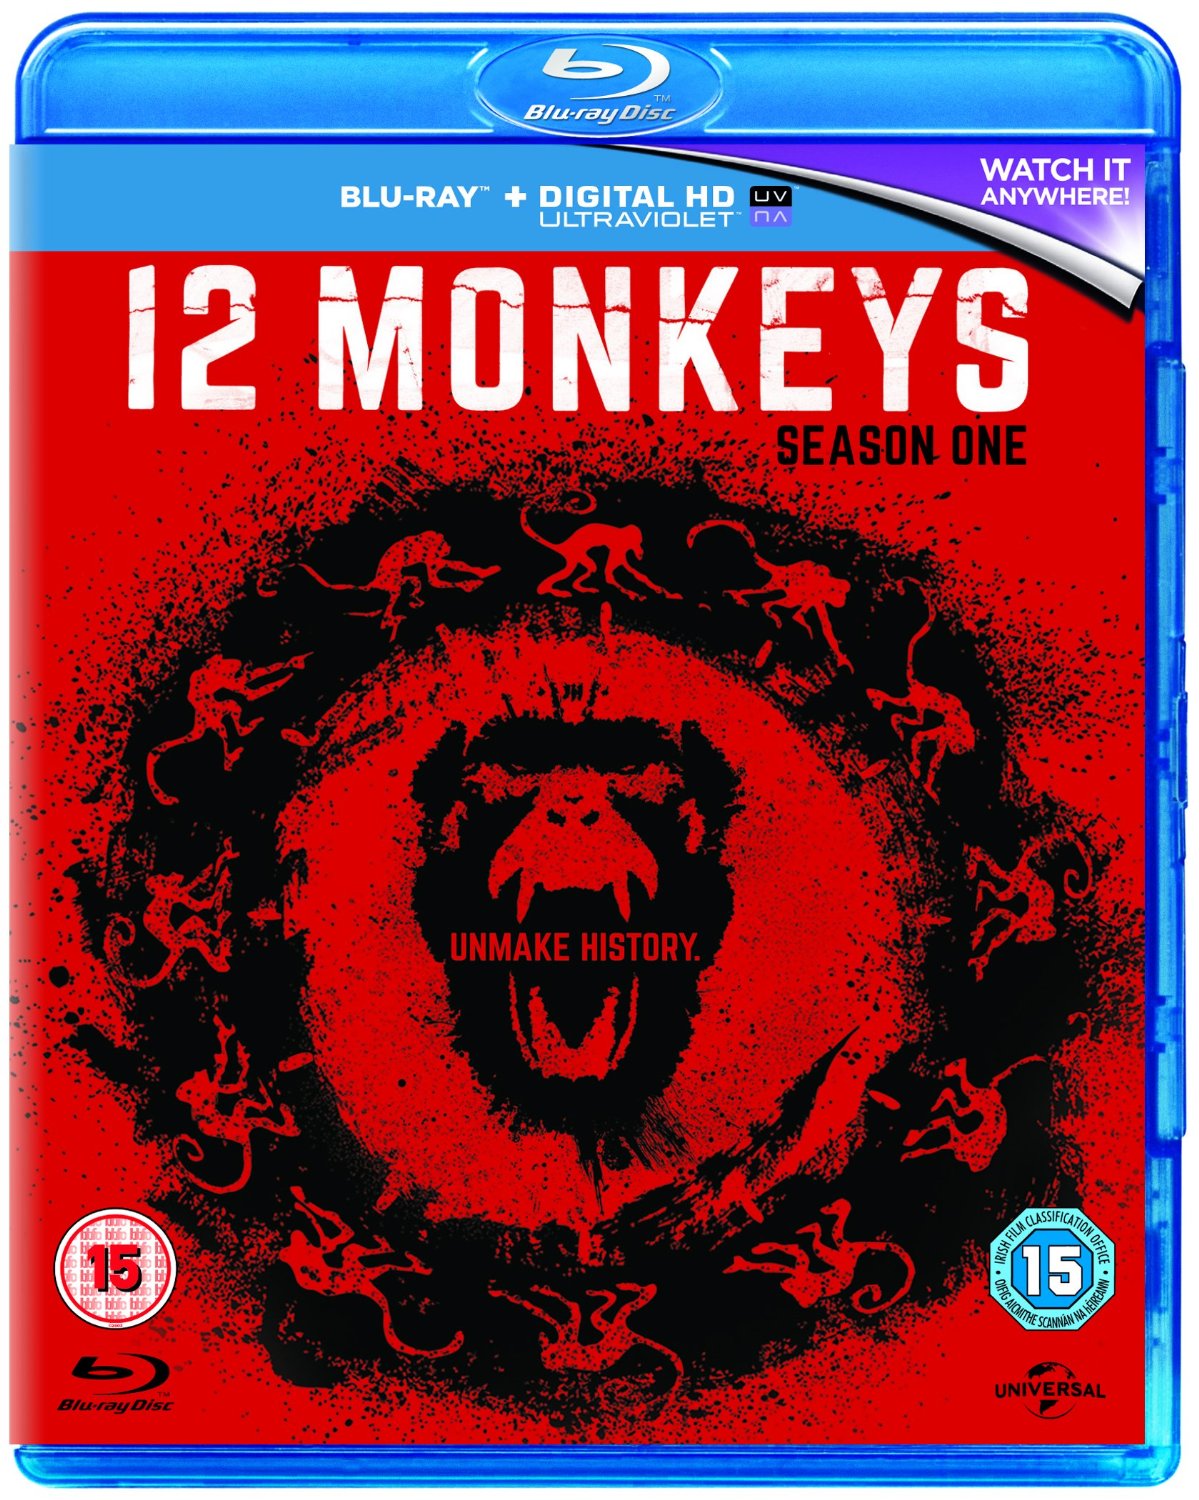 12 Monkeys Season 1 Blu-ray review: time for a comeback?